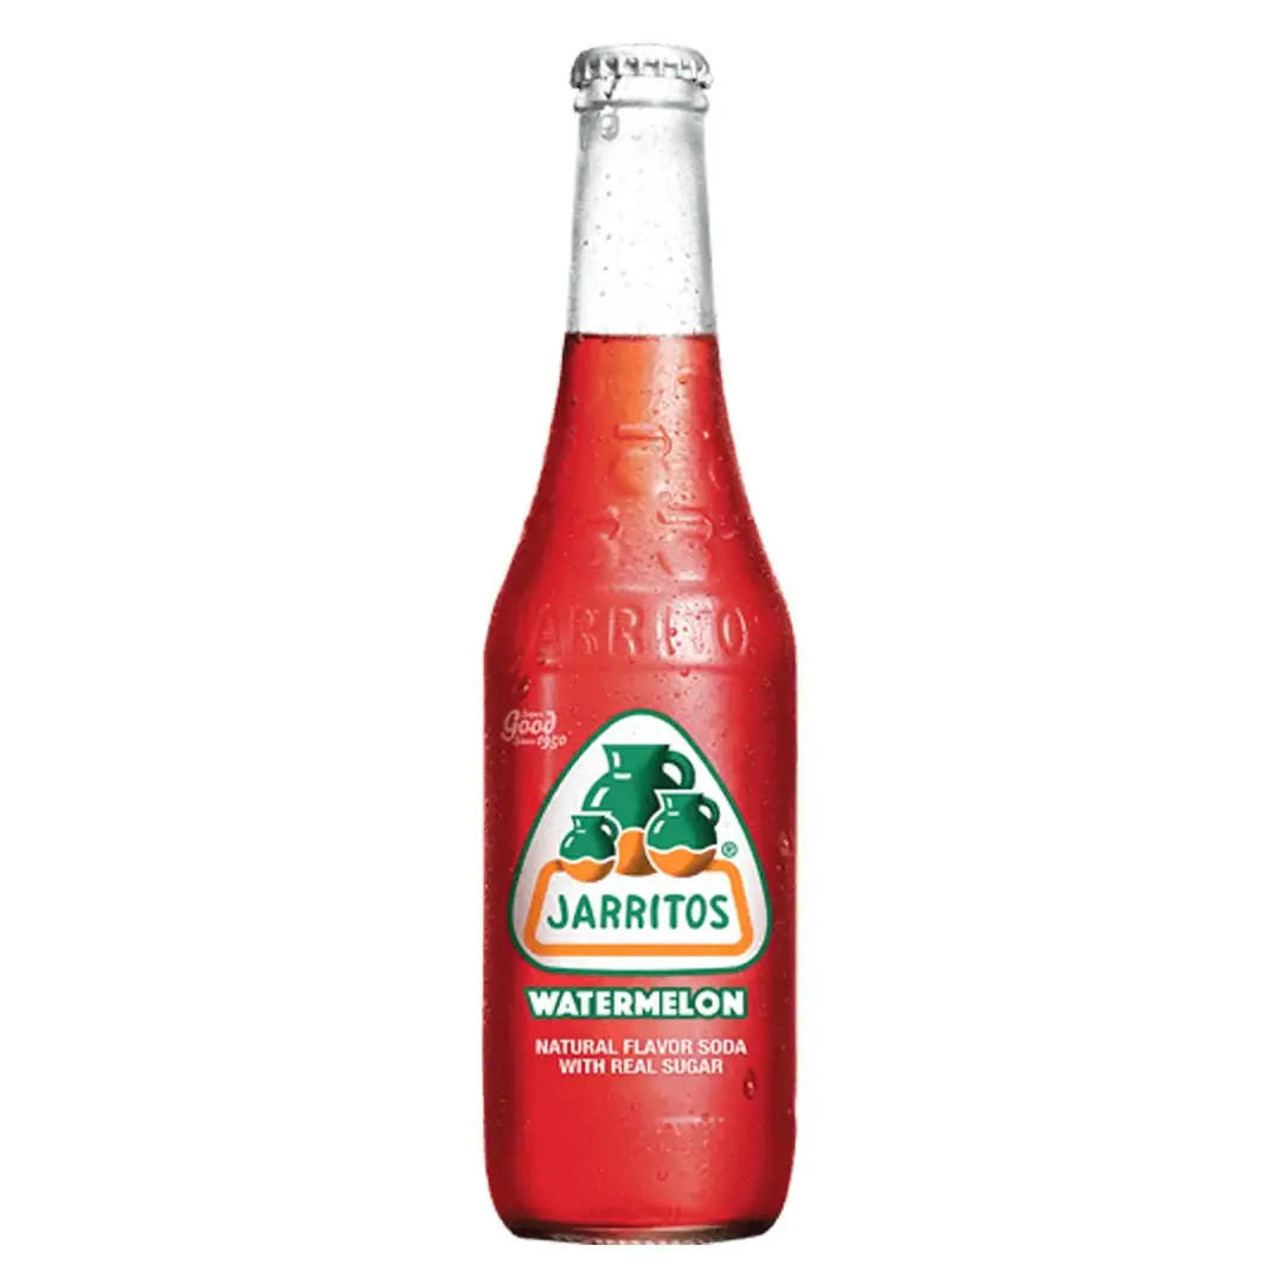 jarritos Jarritos Watermelon Soda 12.5 oz/18.75 lbs (24-Case) - A Refreshing Mexican Watermelon Soft Drink with 100% Natural Sugar 